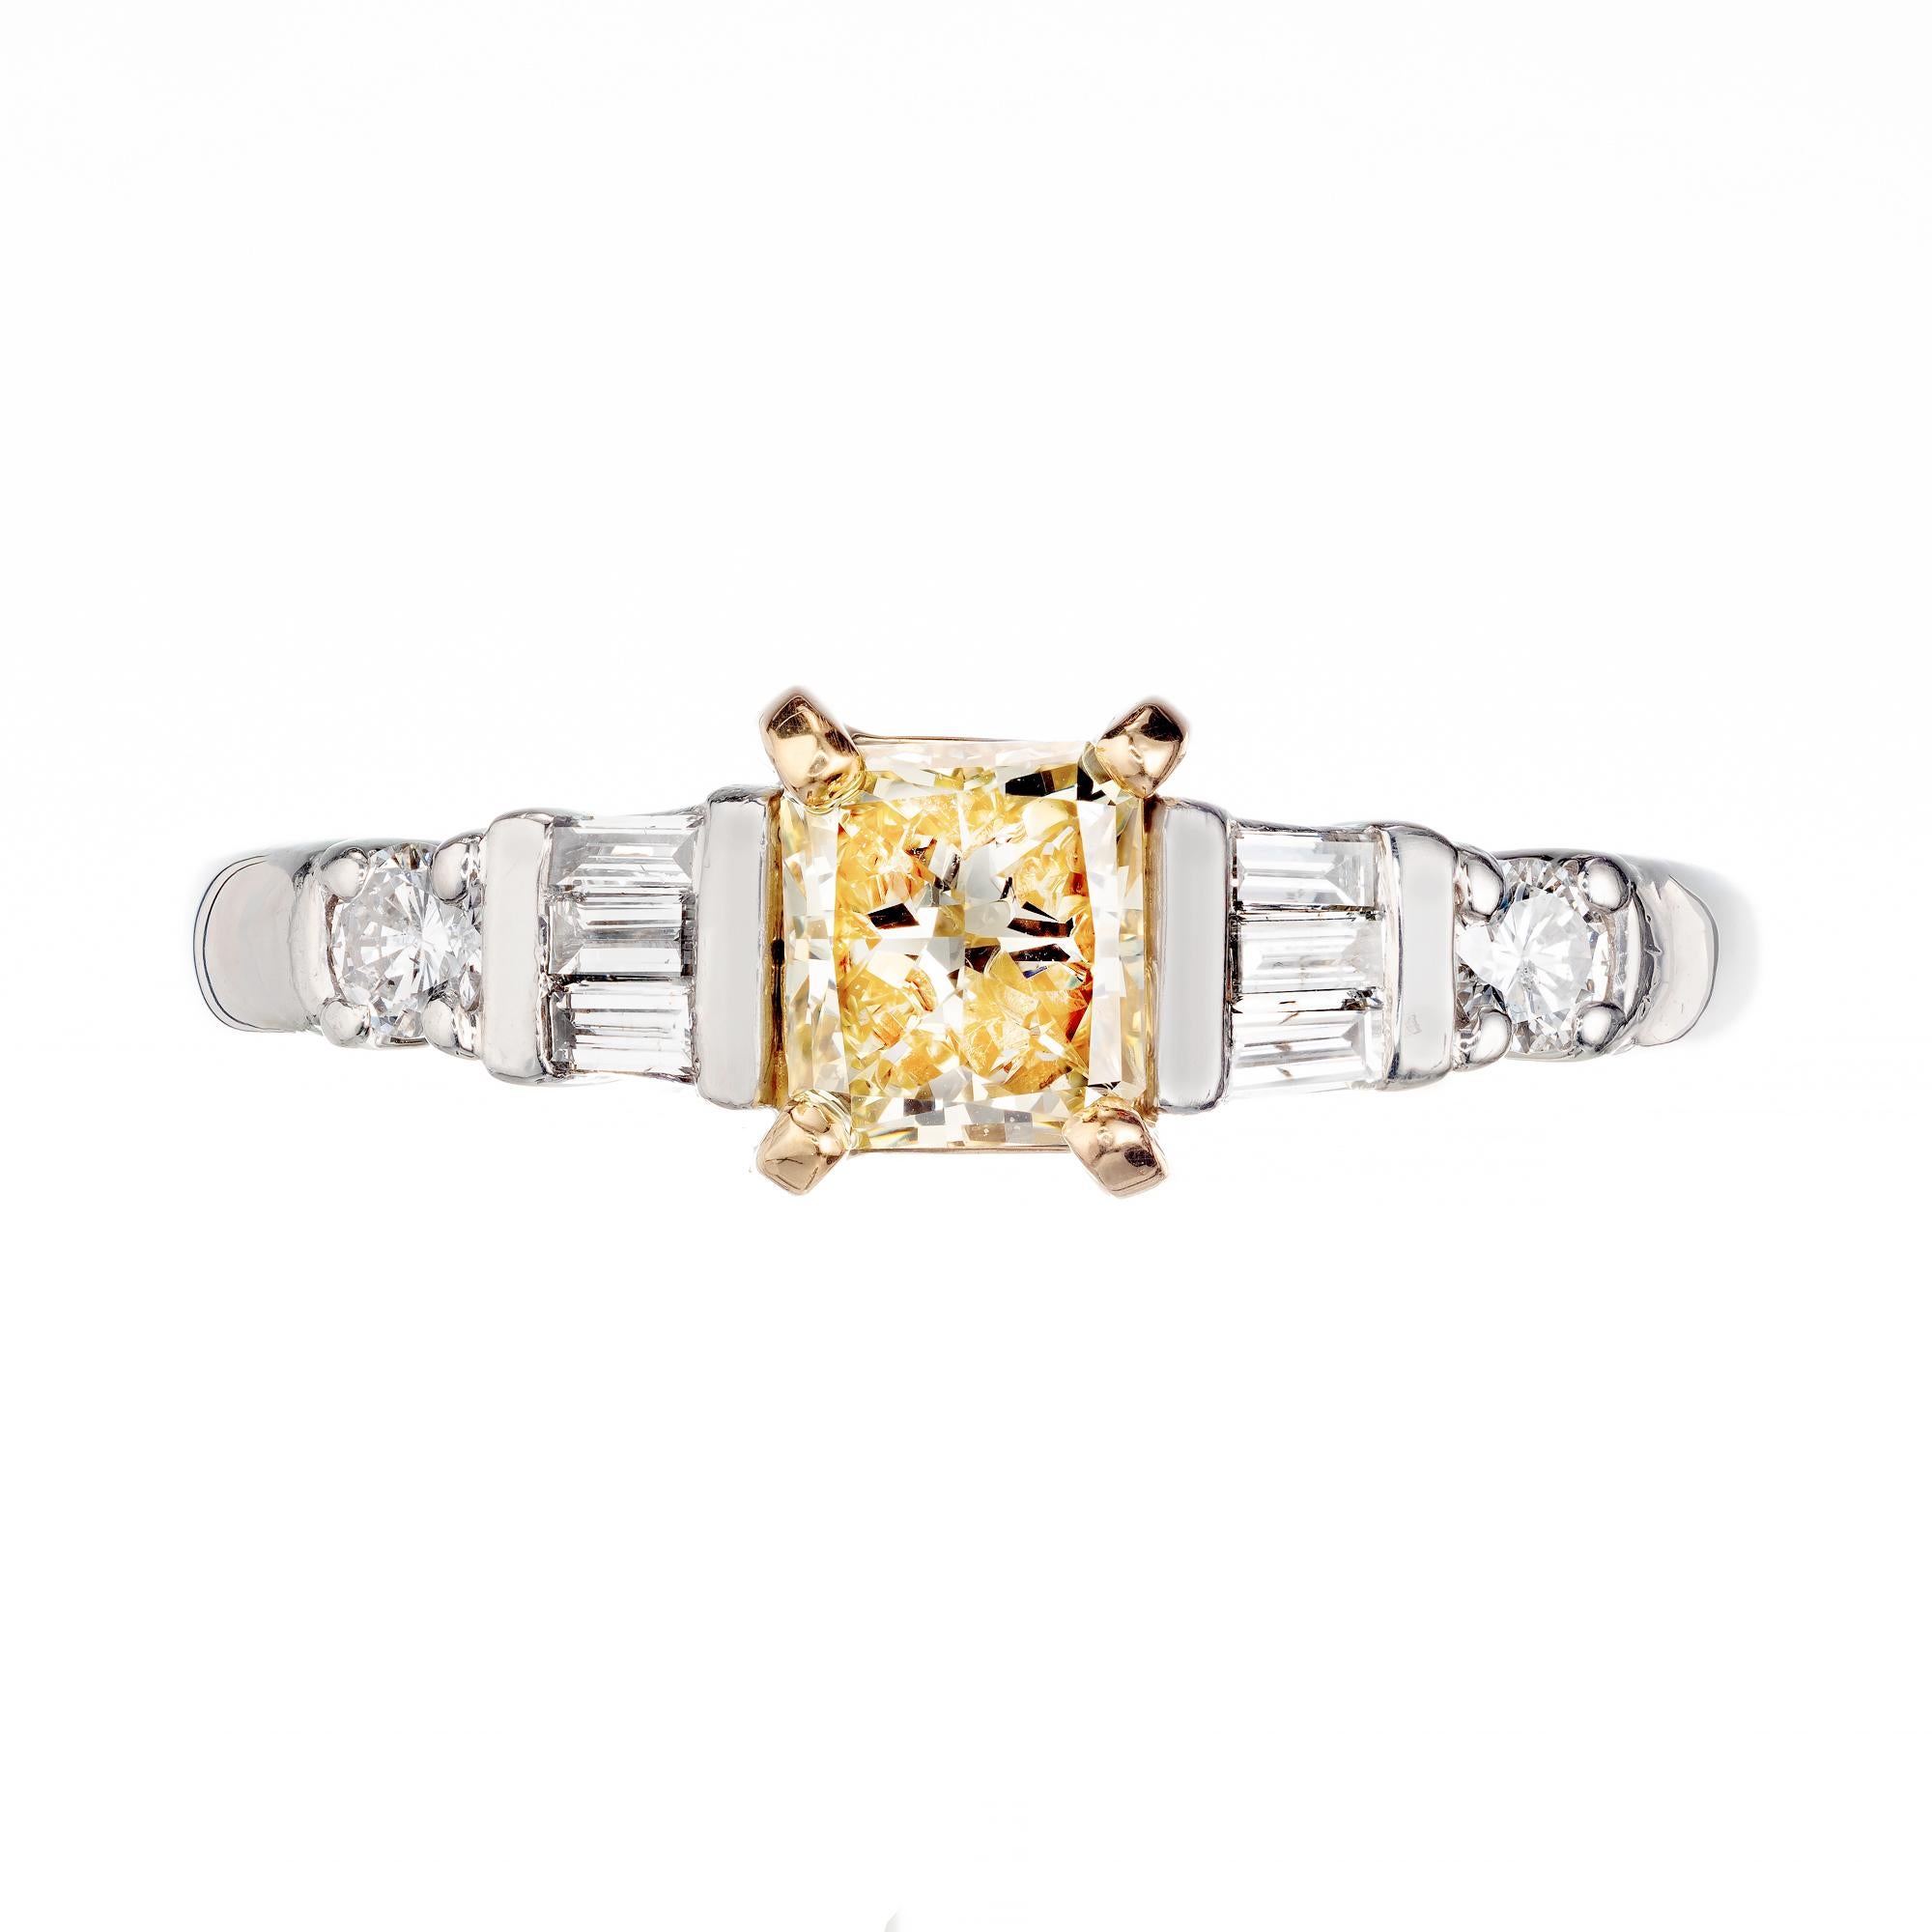 75 carat yellow diamond ring